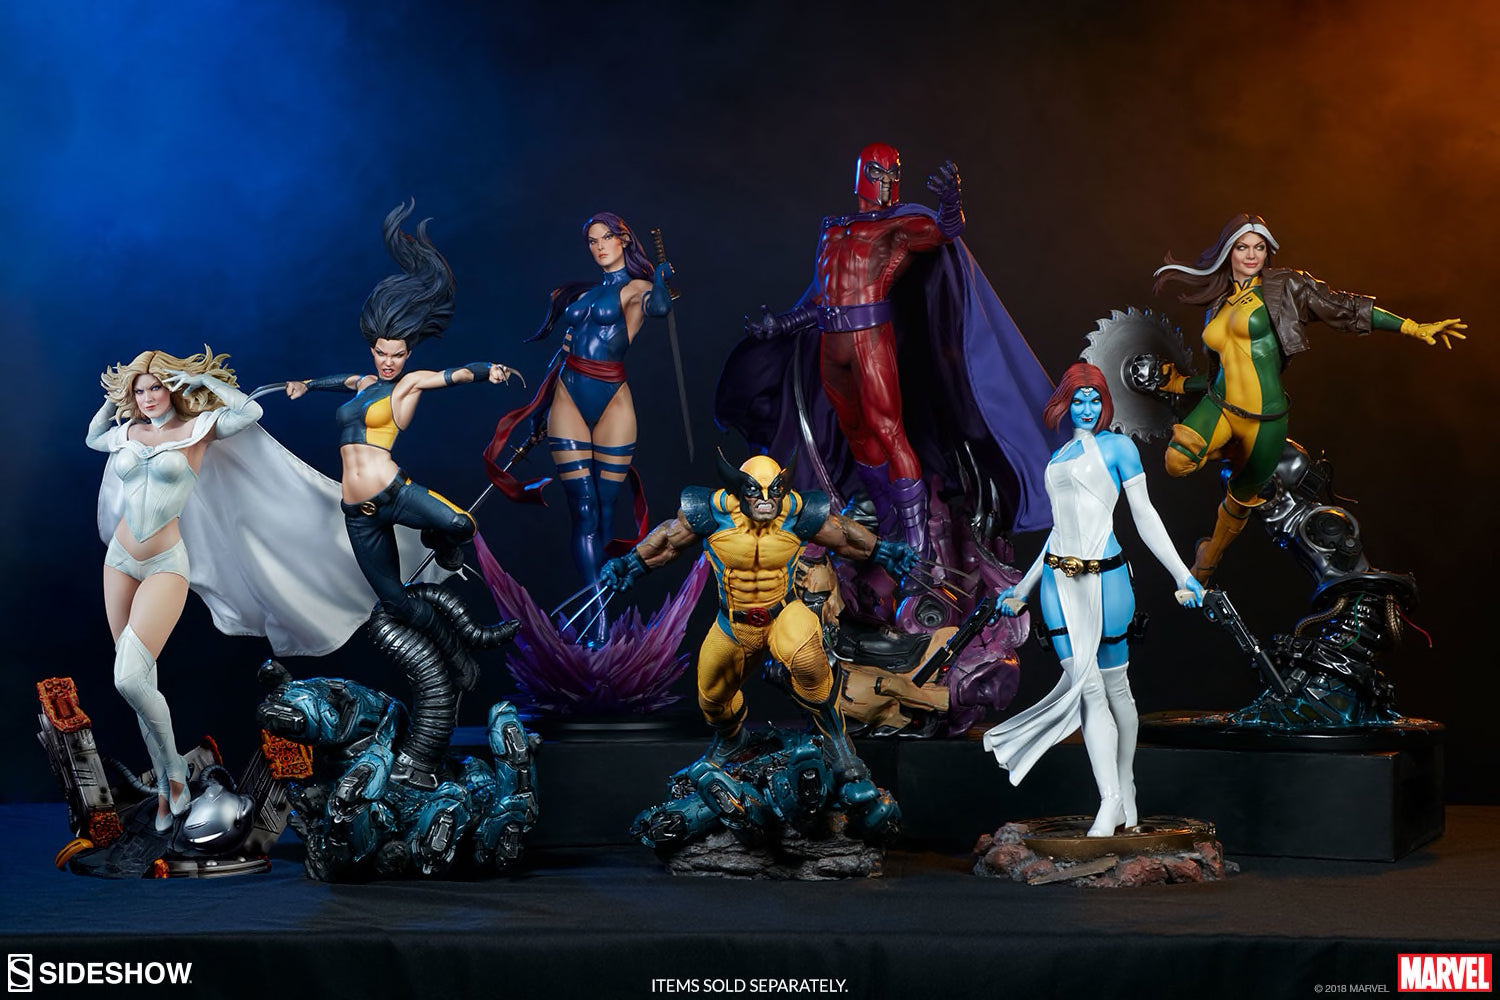 Sideshow Collectibles - Premium Format Figure - Marvel - Psylocke - Marvelous Toys